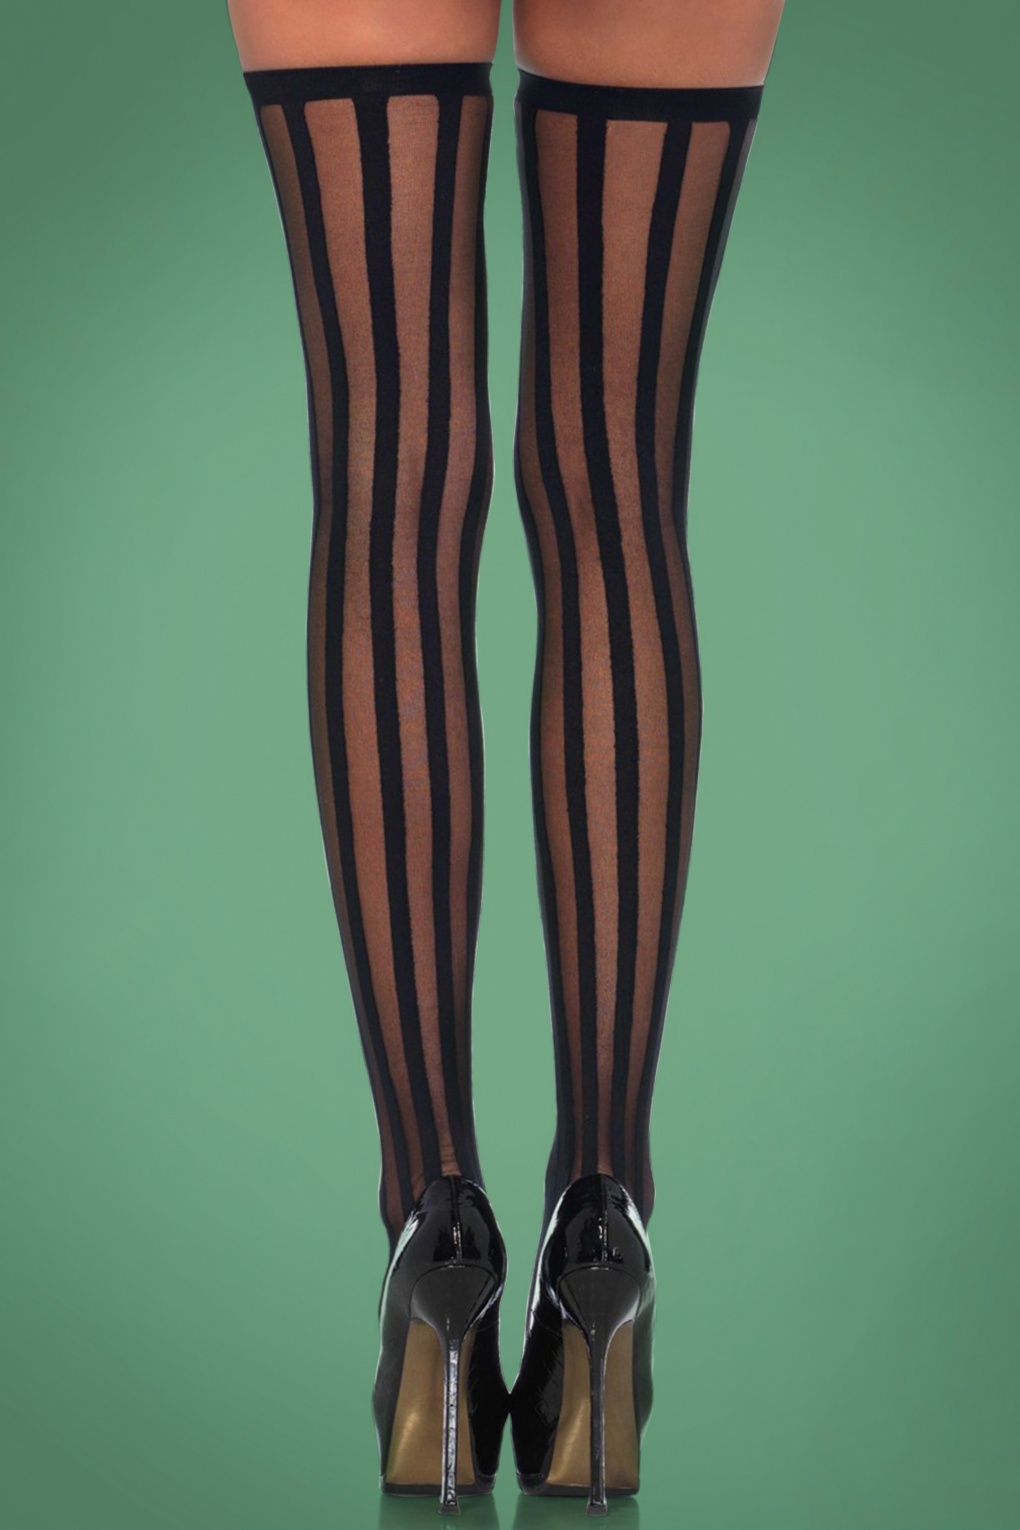 Victorian Stockings Socks Hosiery Tights